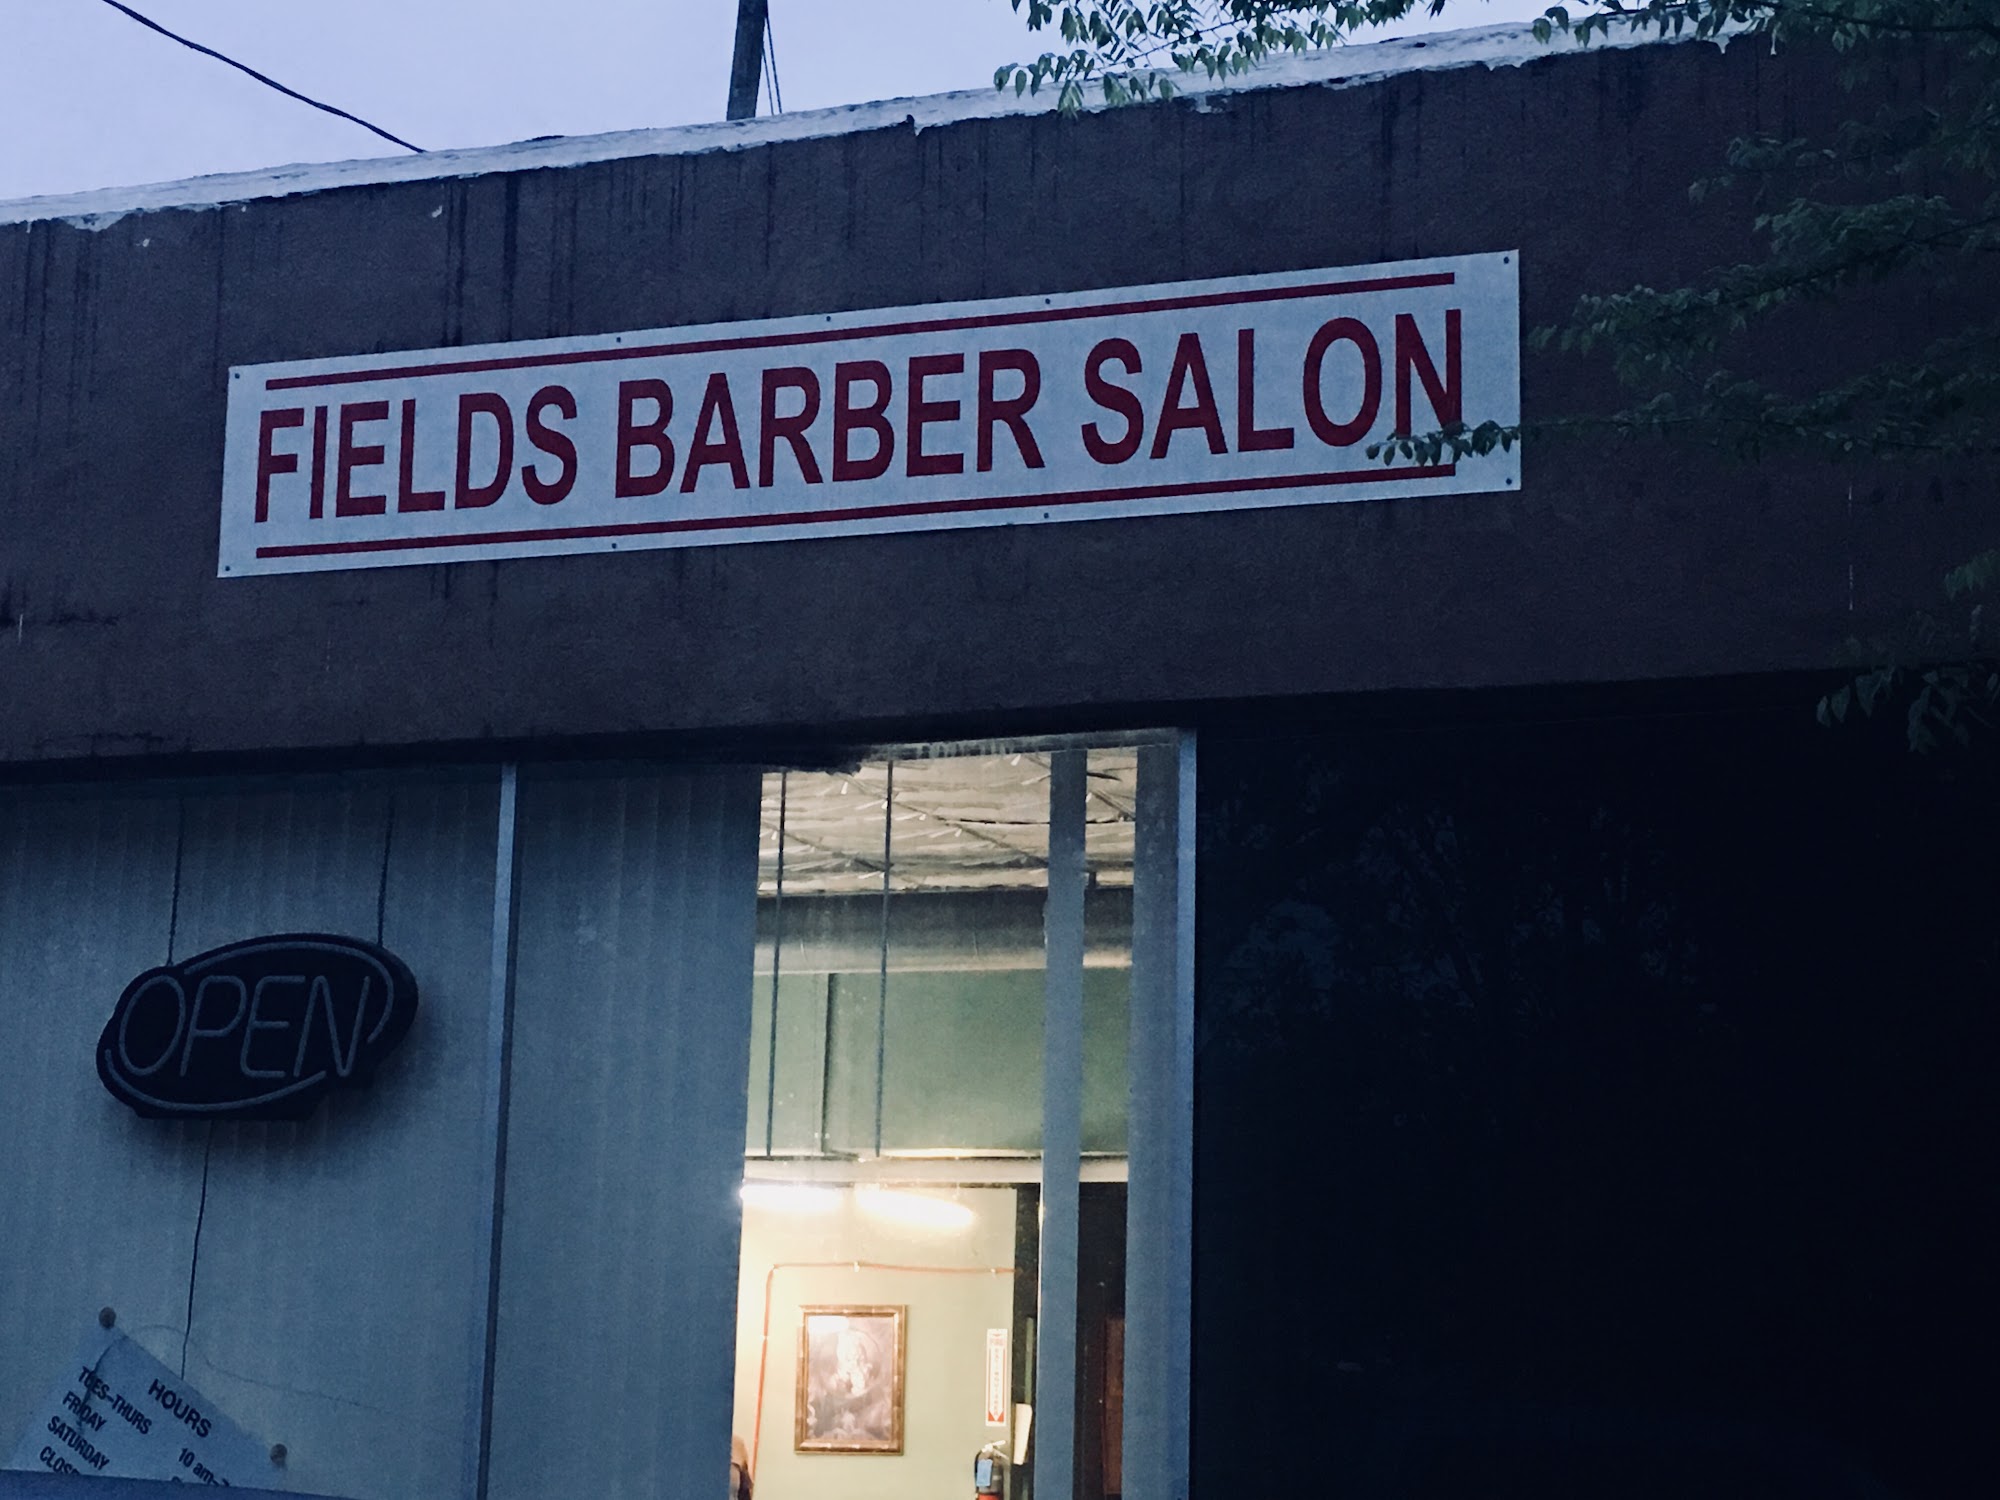 Fields barber salon